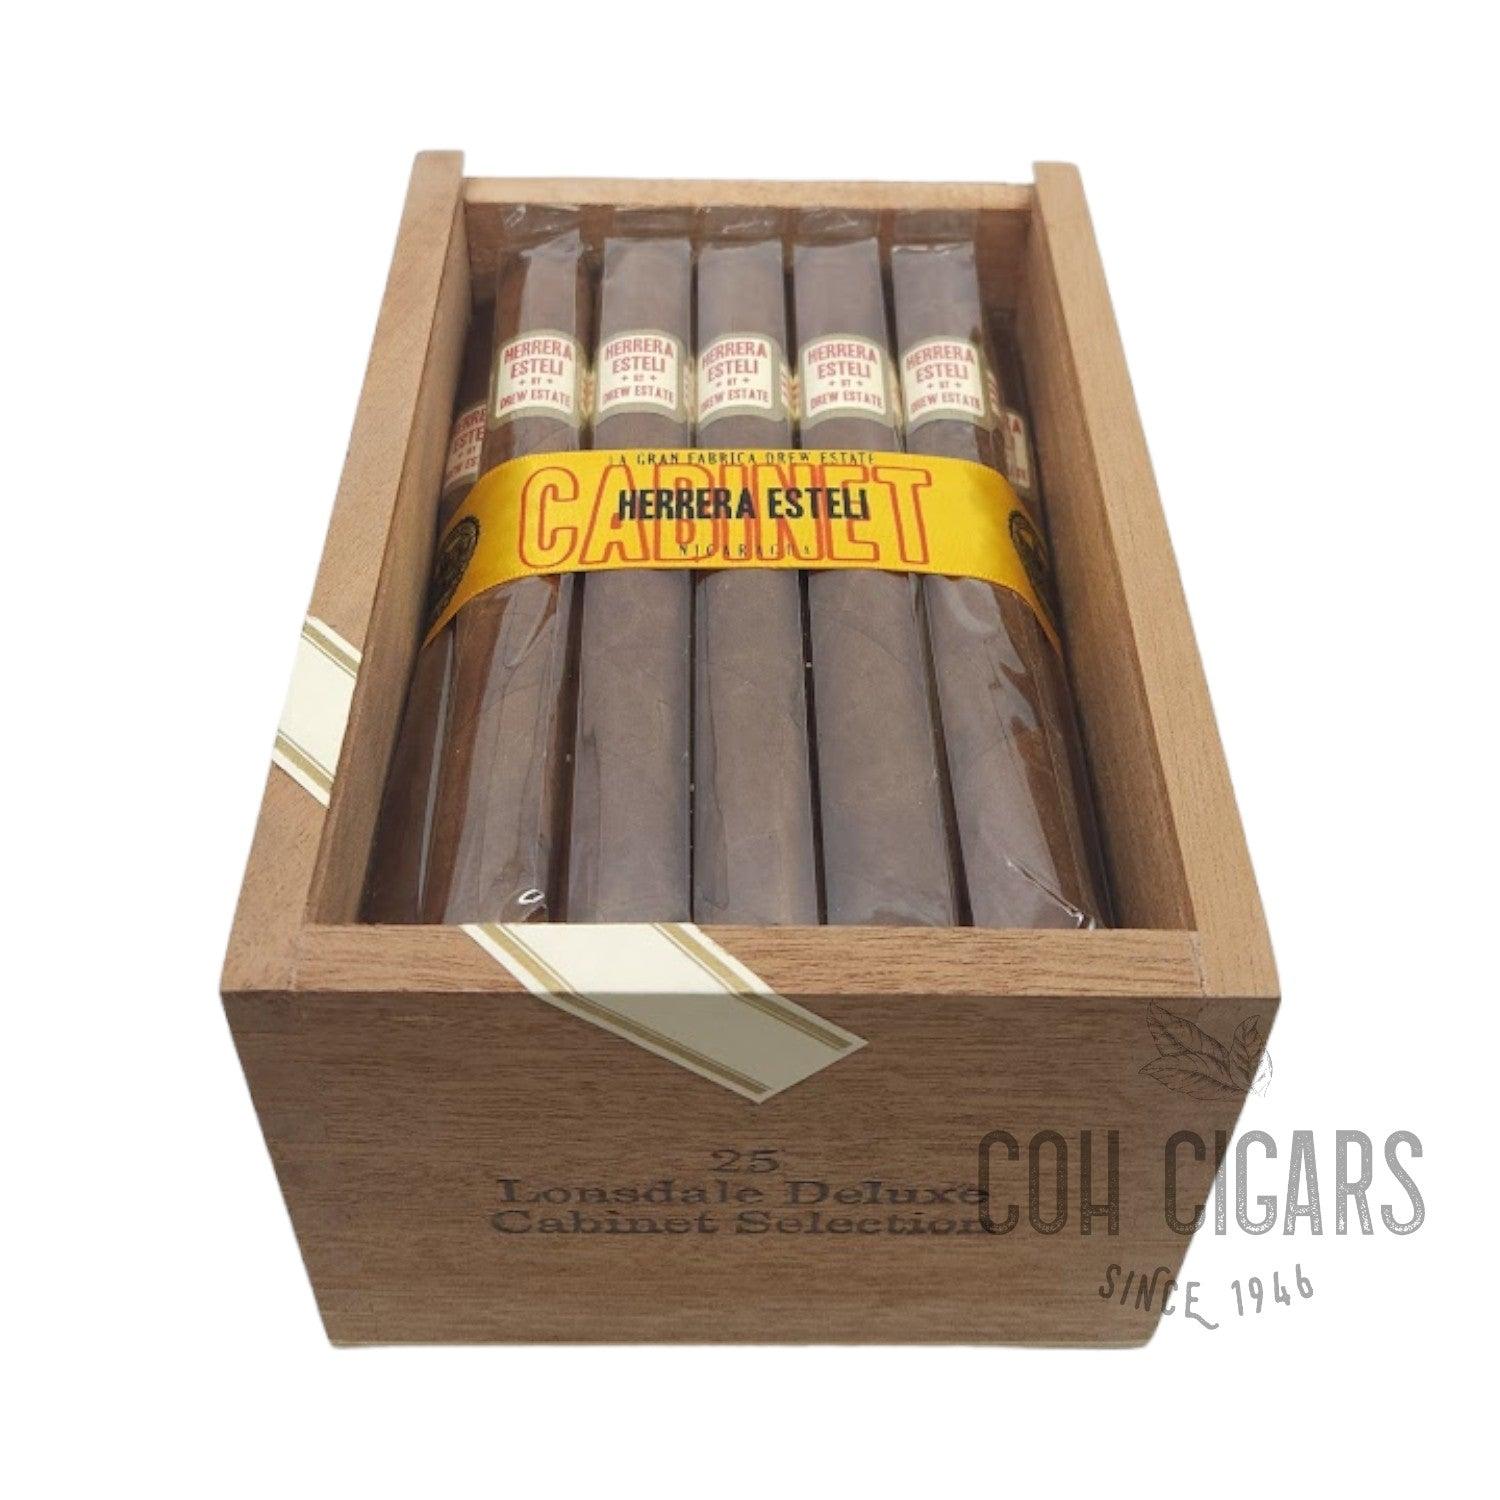 Drew Estate Cigar | Herrera Esteli Habano Lonsdale Deluxe | Box 25 - hk.cohcigars